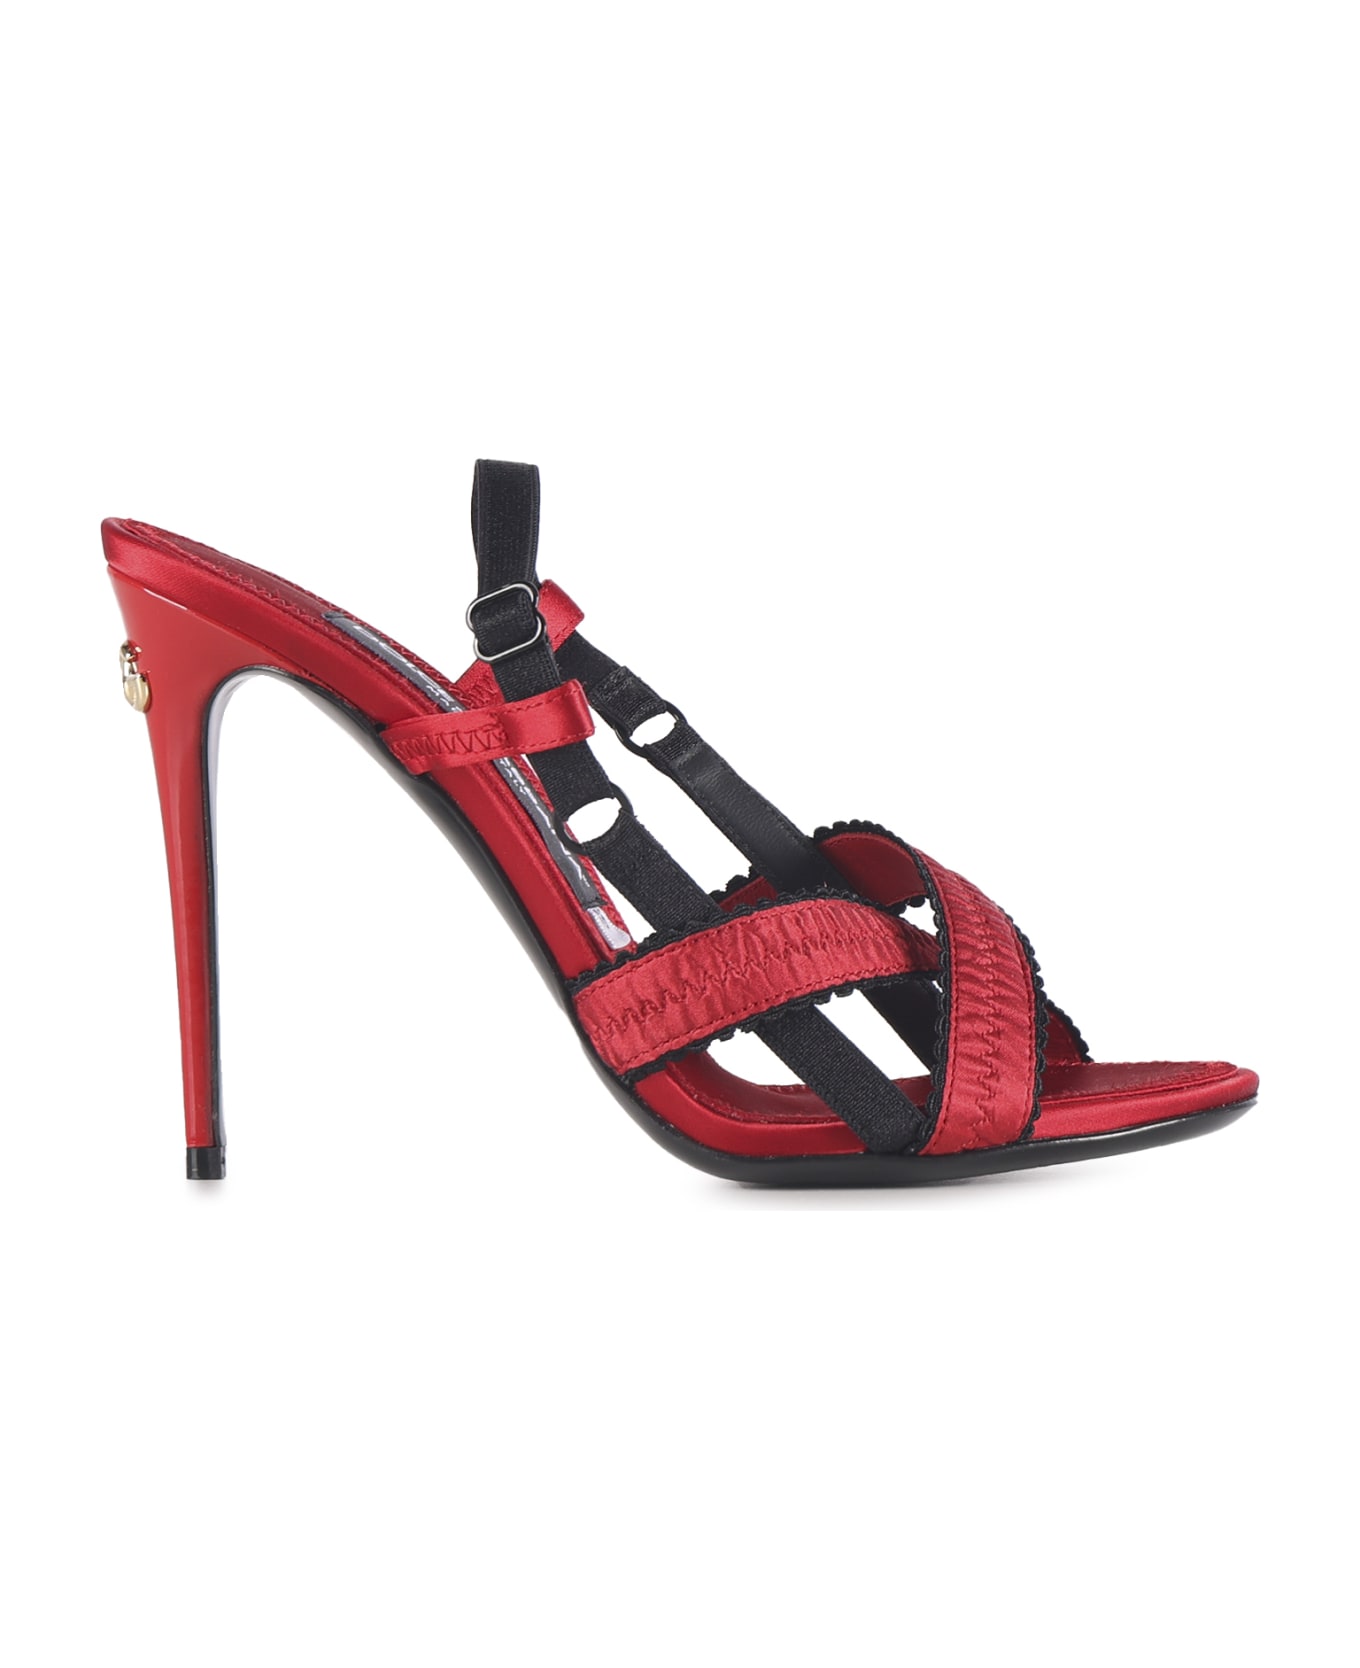 Dolce & Gabbana Corset-style Satin Sandals - Red, black サンダル